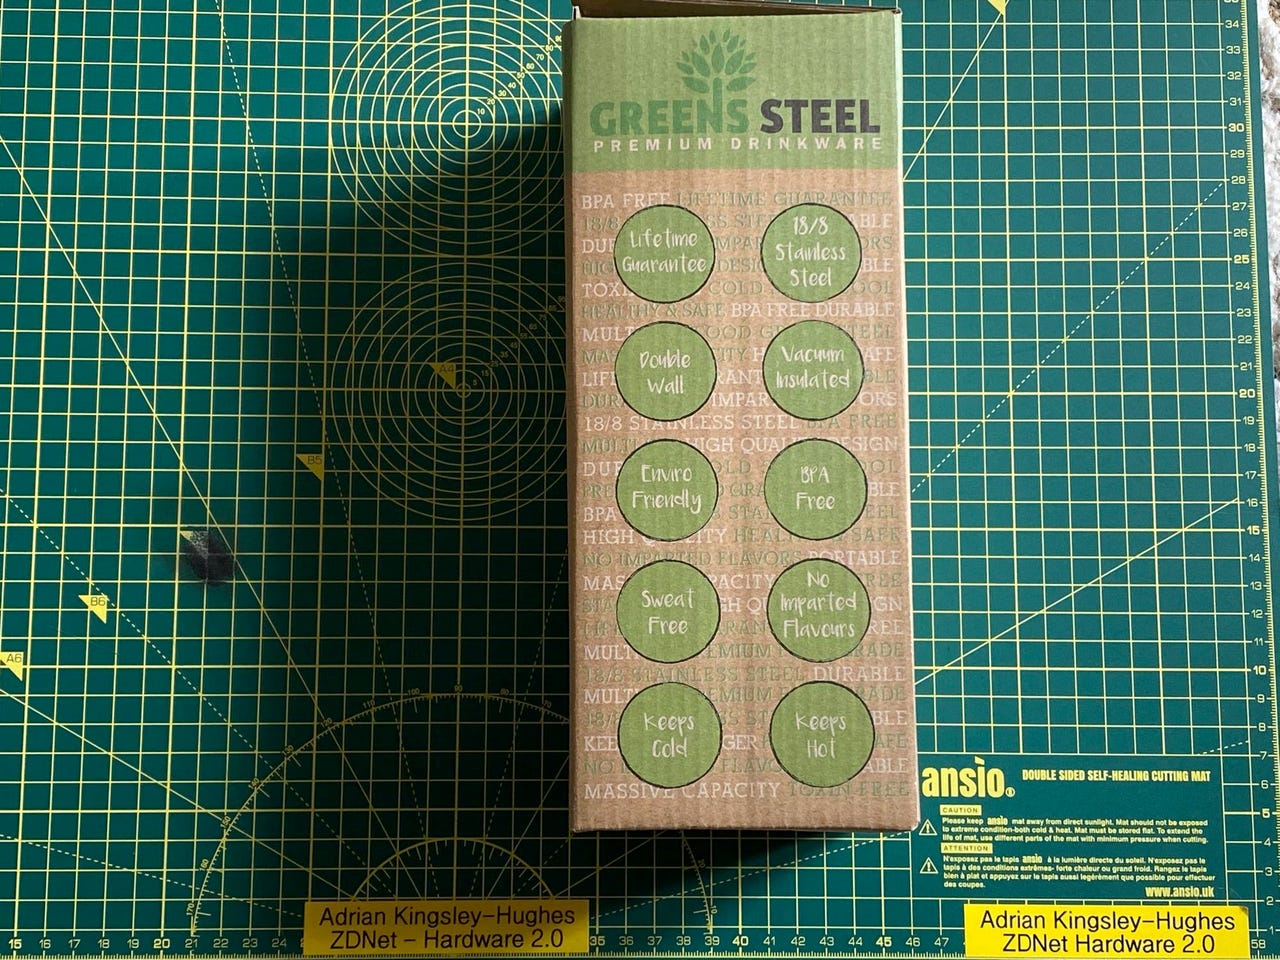 Green Steel Beast 30oz